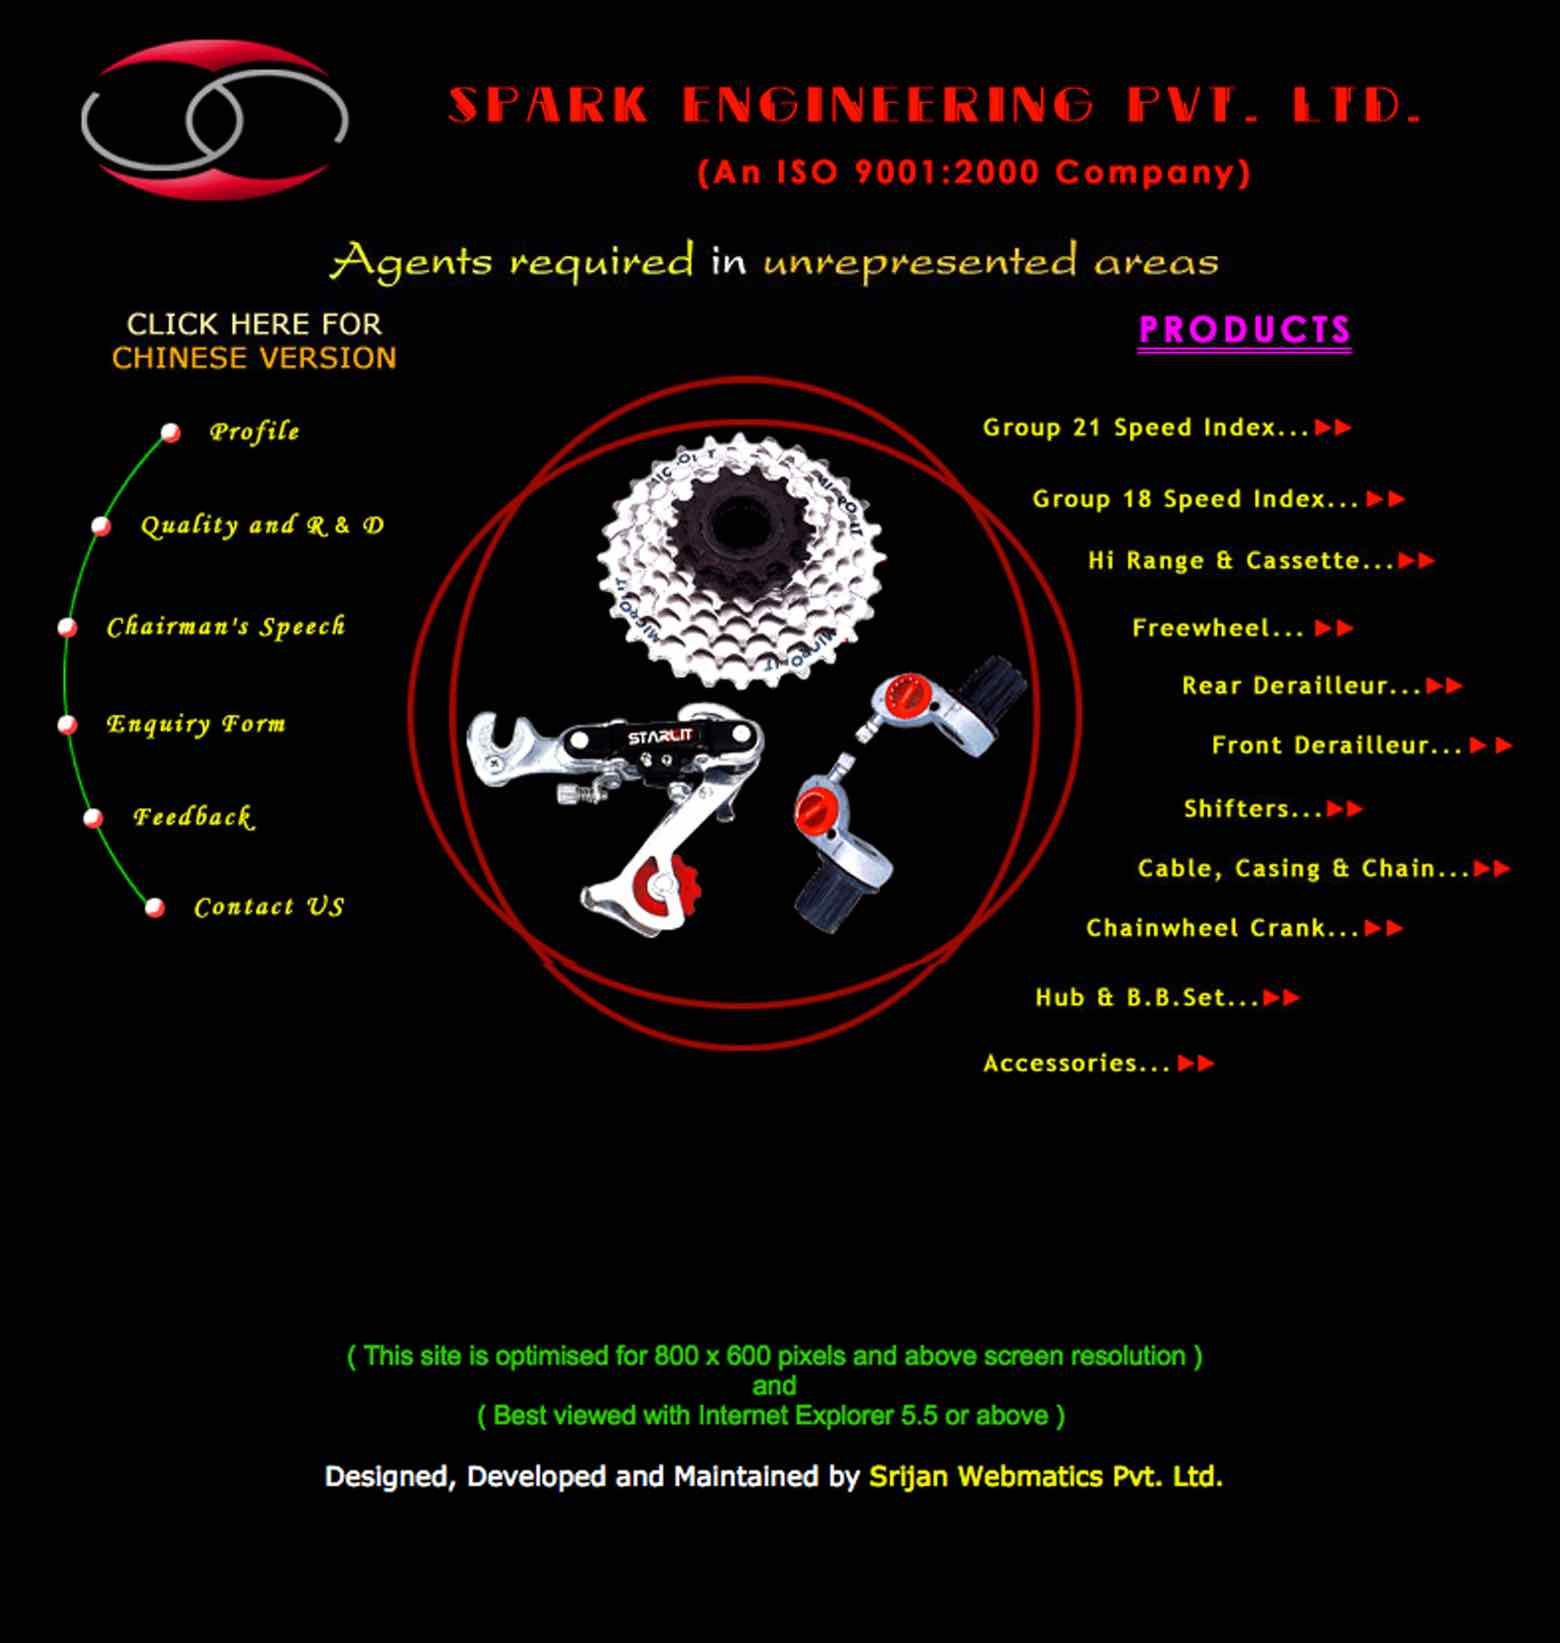 Starlit - web site 2005? image 1 main image